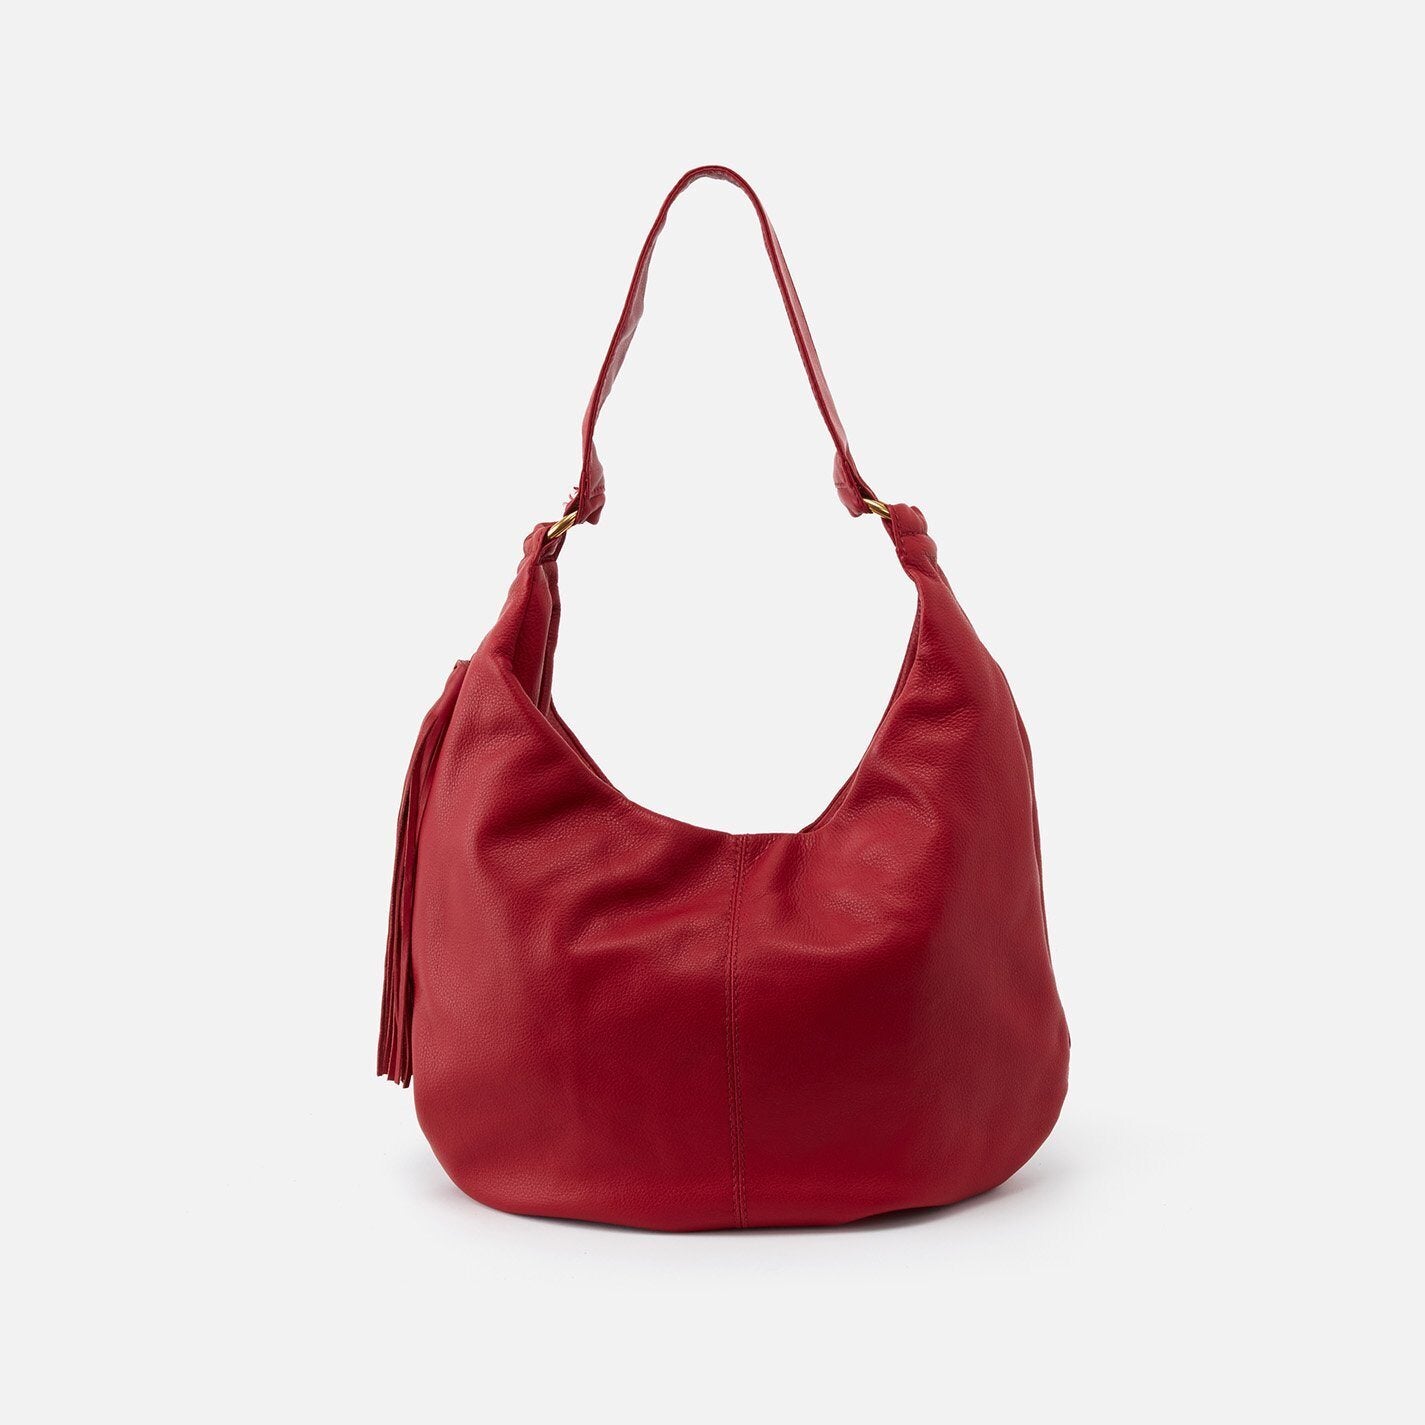 Buy Cayla Women handbags purse PU Leather Top handle Shoulder bag Satchel hobo  Tote Bags set 4pcs, Red, Medium at Amazon.in